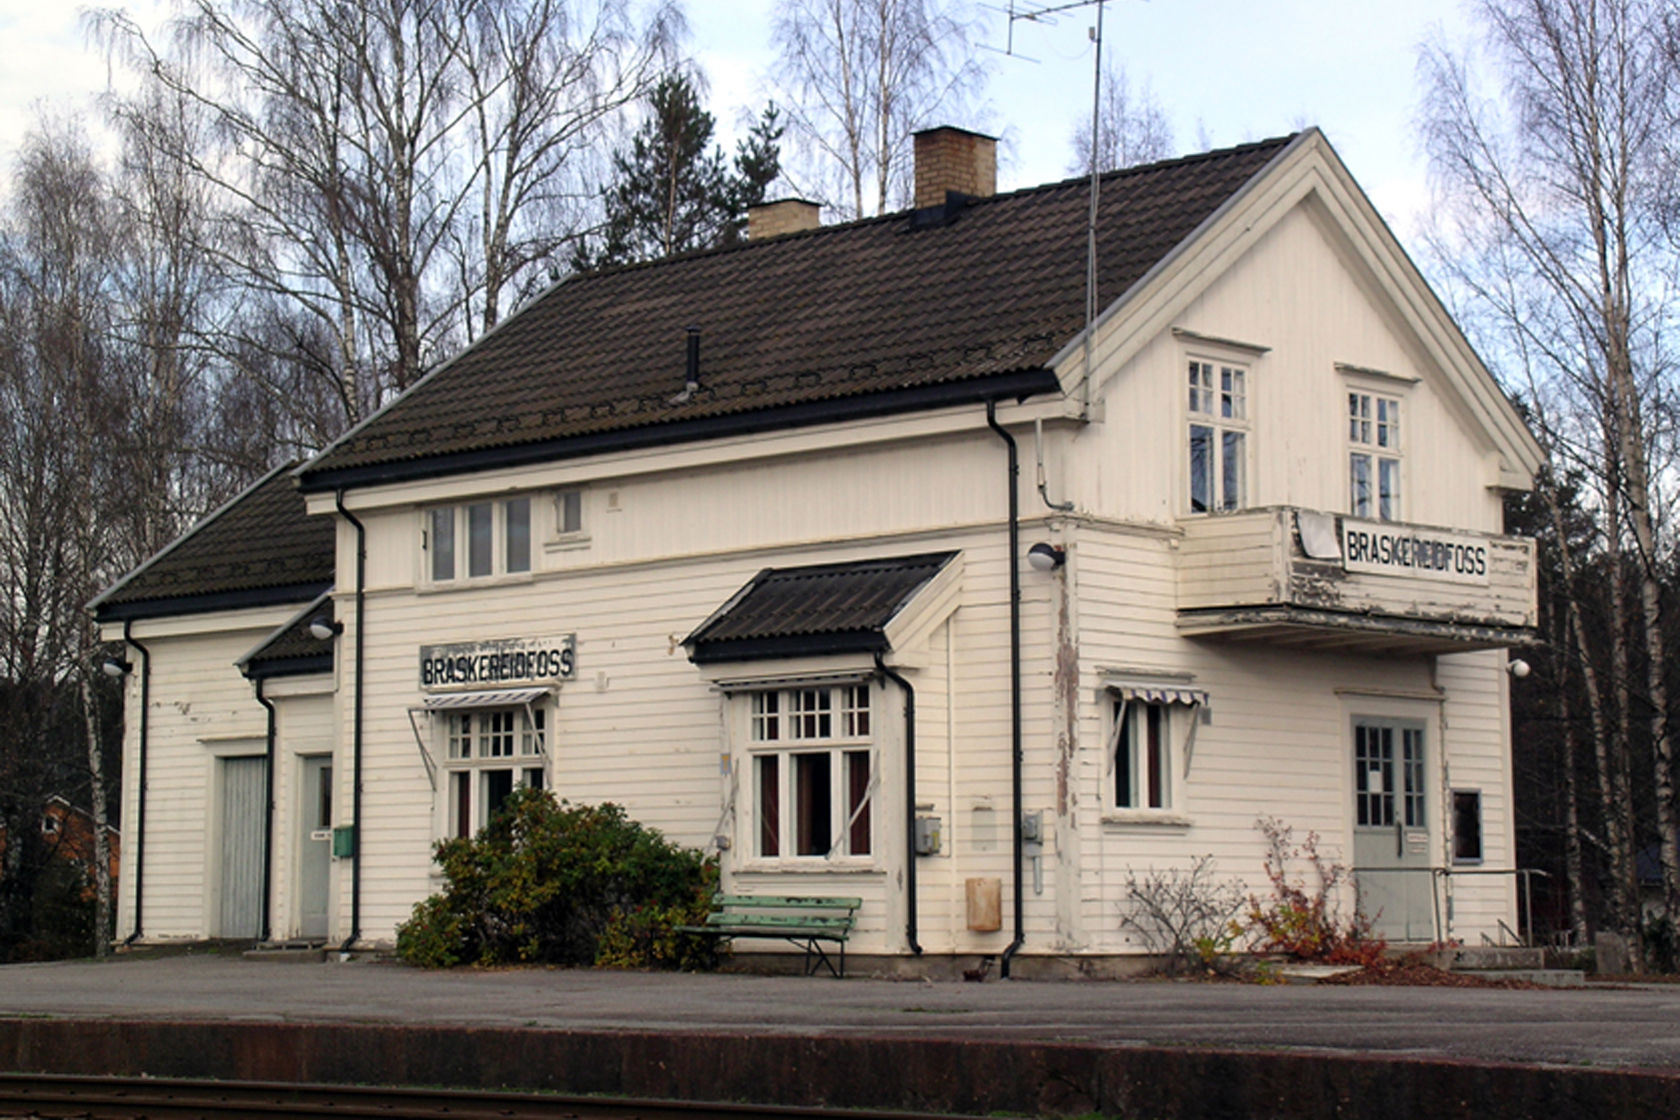 The station building at Braskereidfoss station